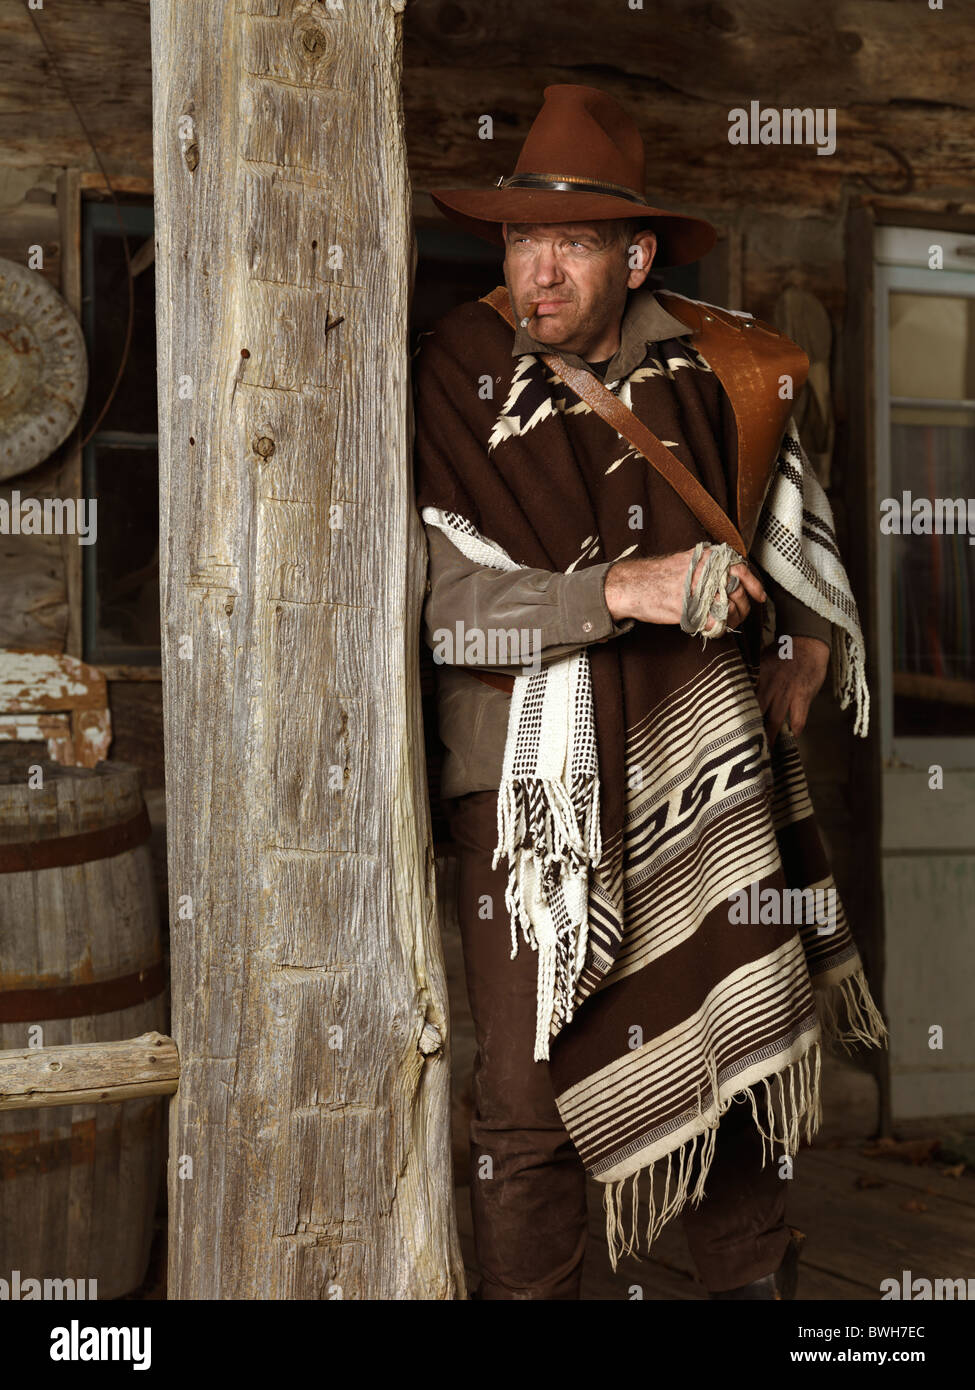 Cowboy portrait hi-res stock photography and images - Alamy